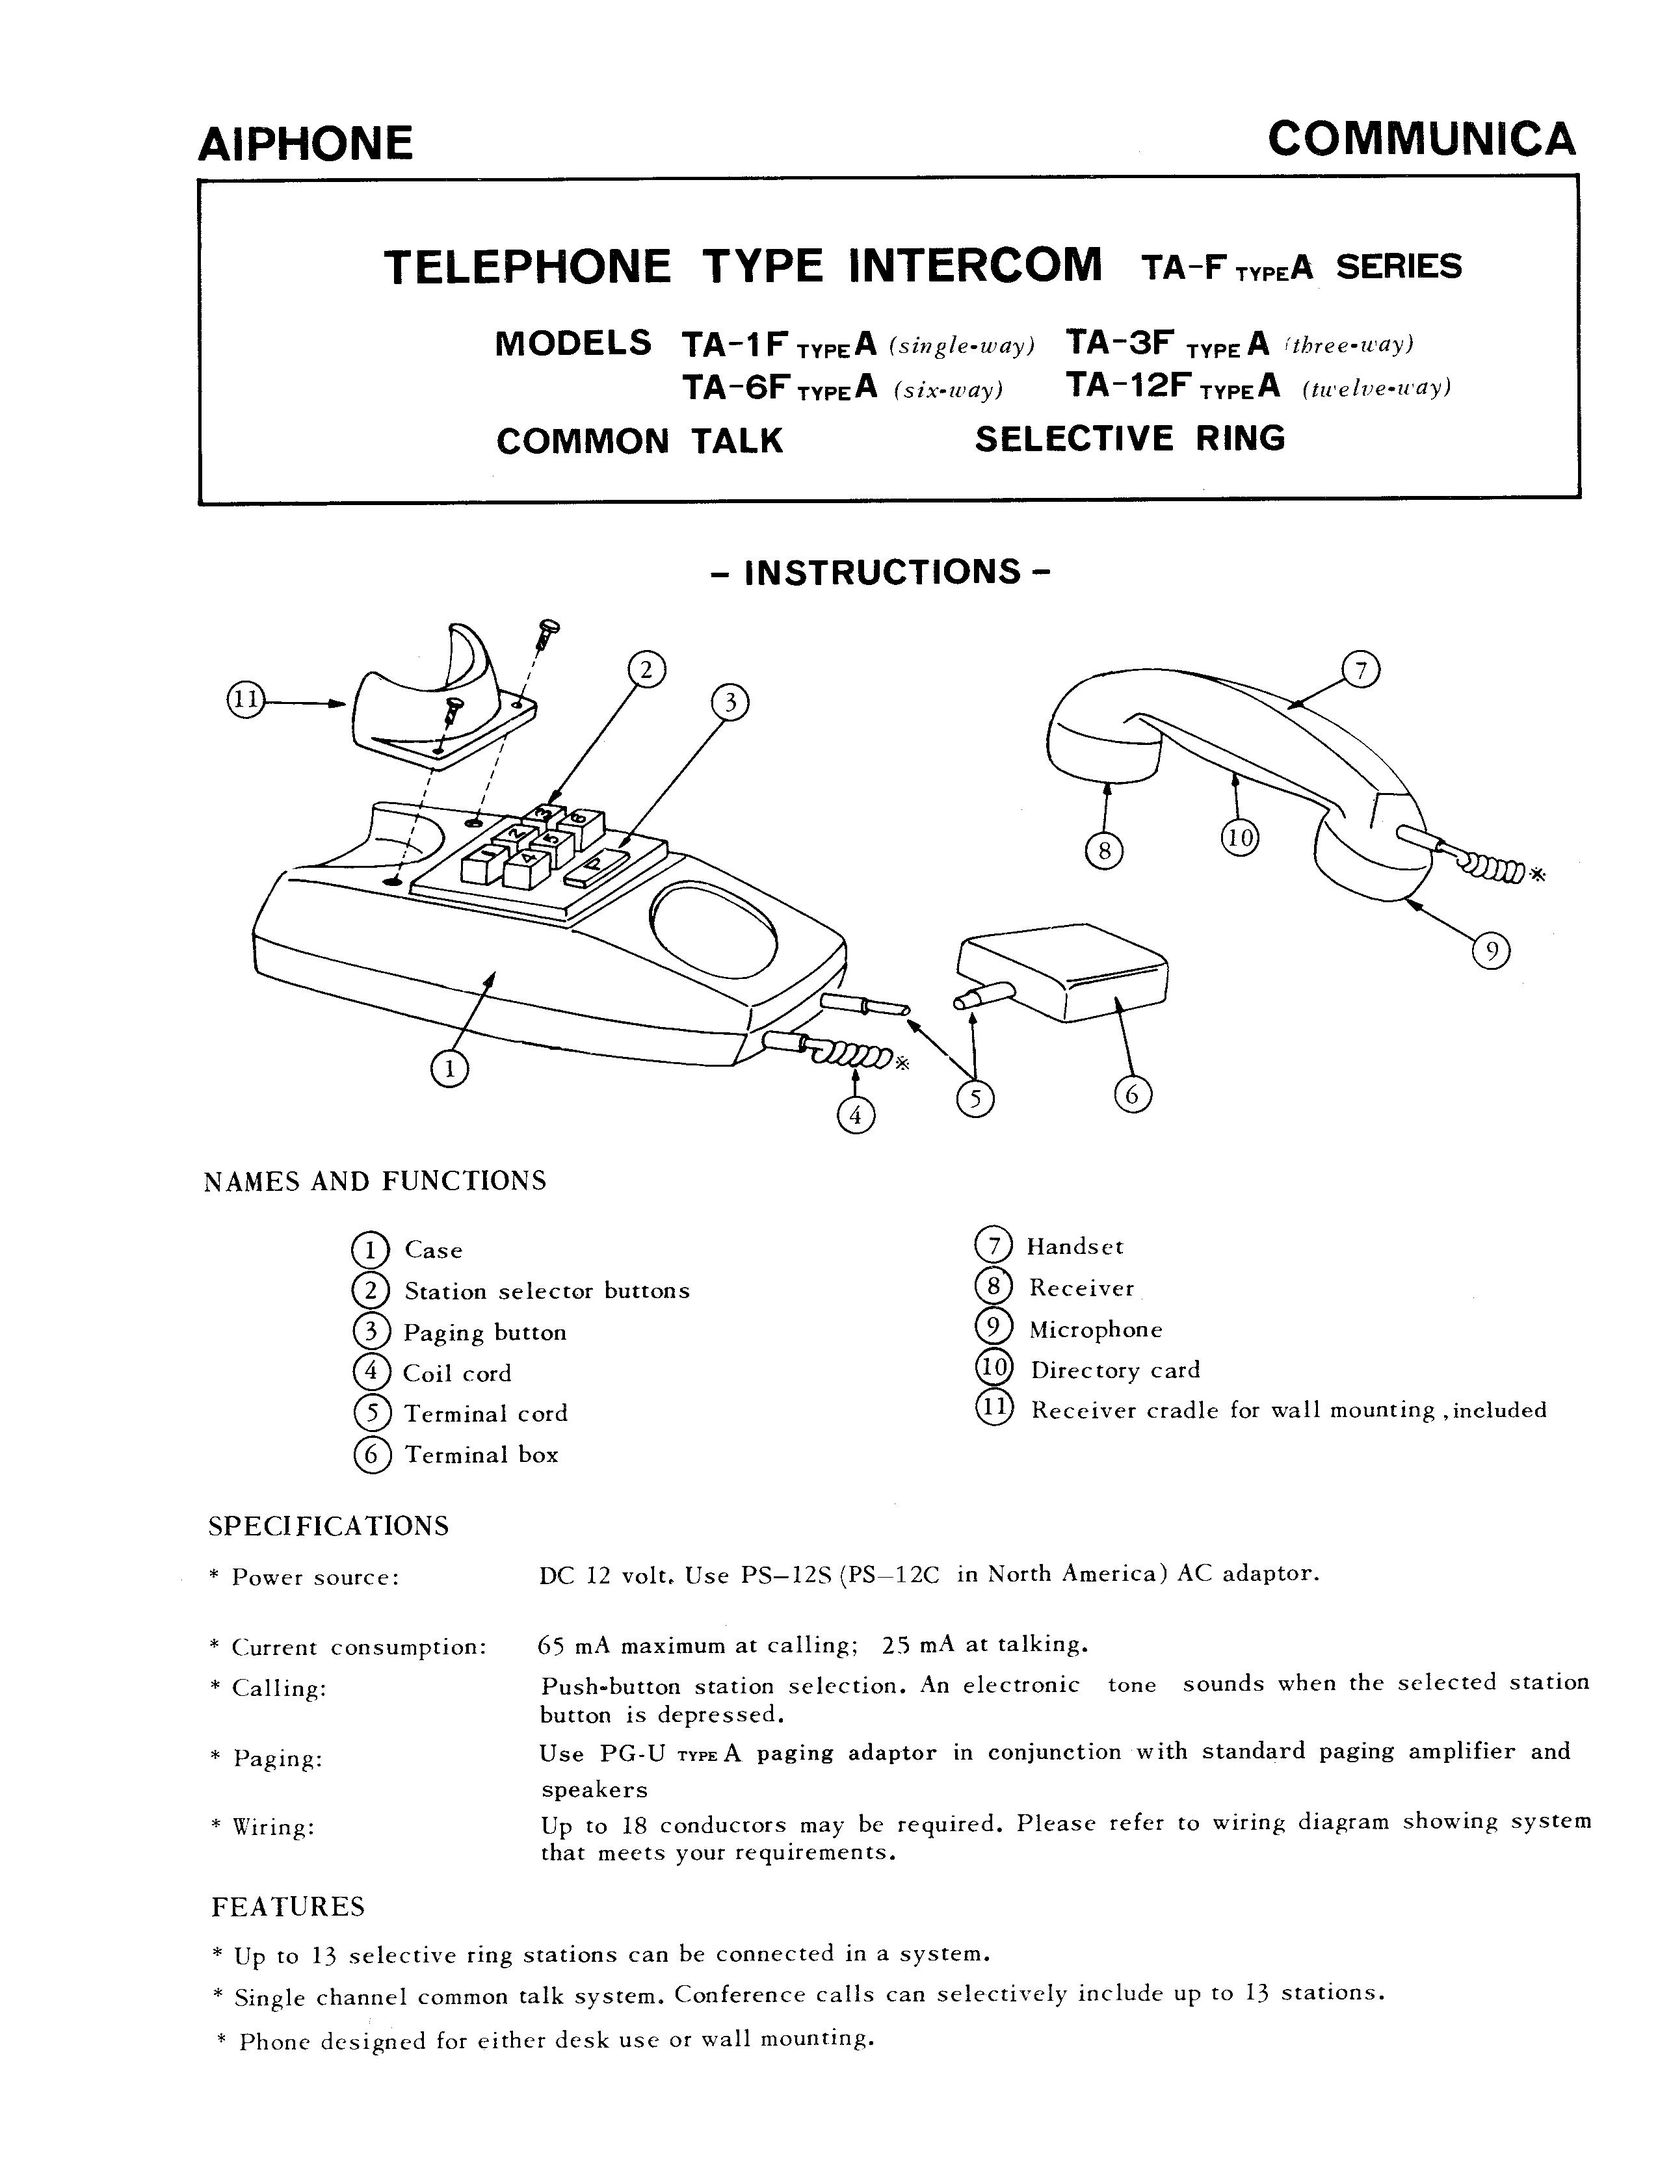 Aiphone TA-1F Telephone User Manual